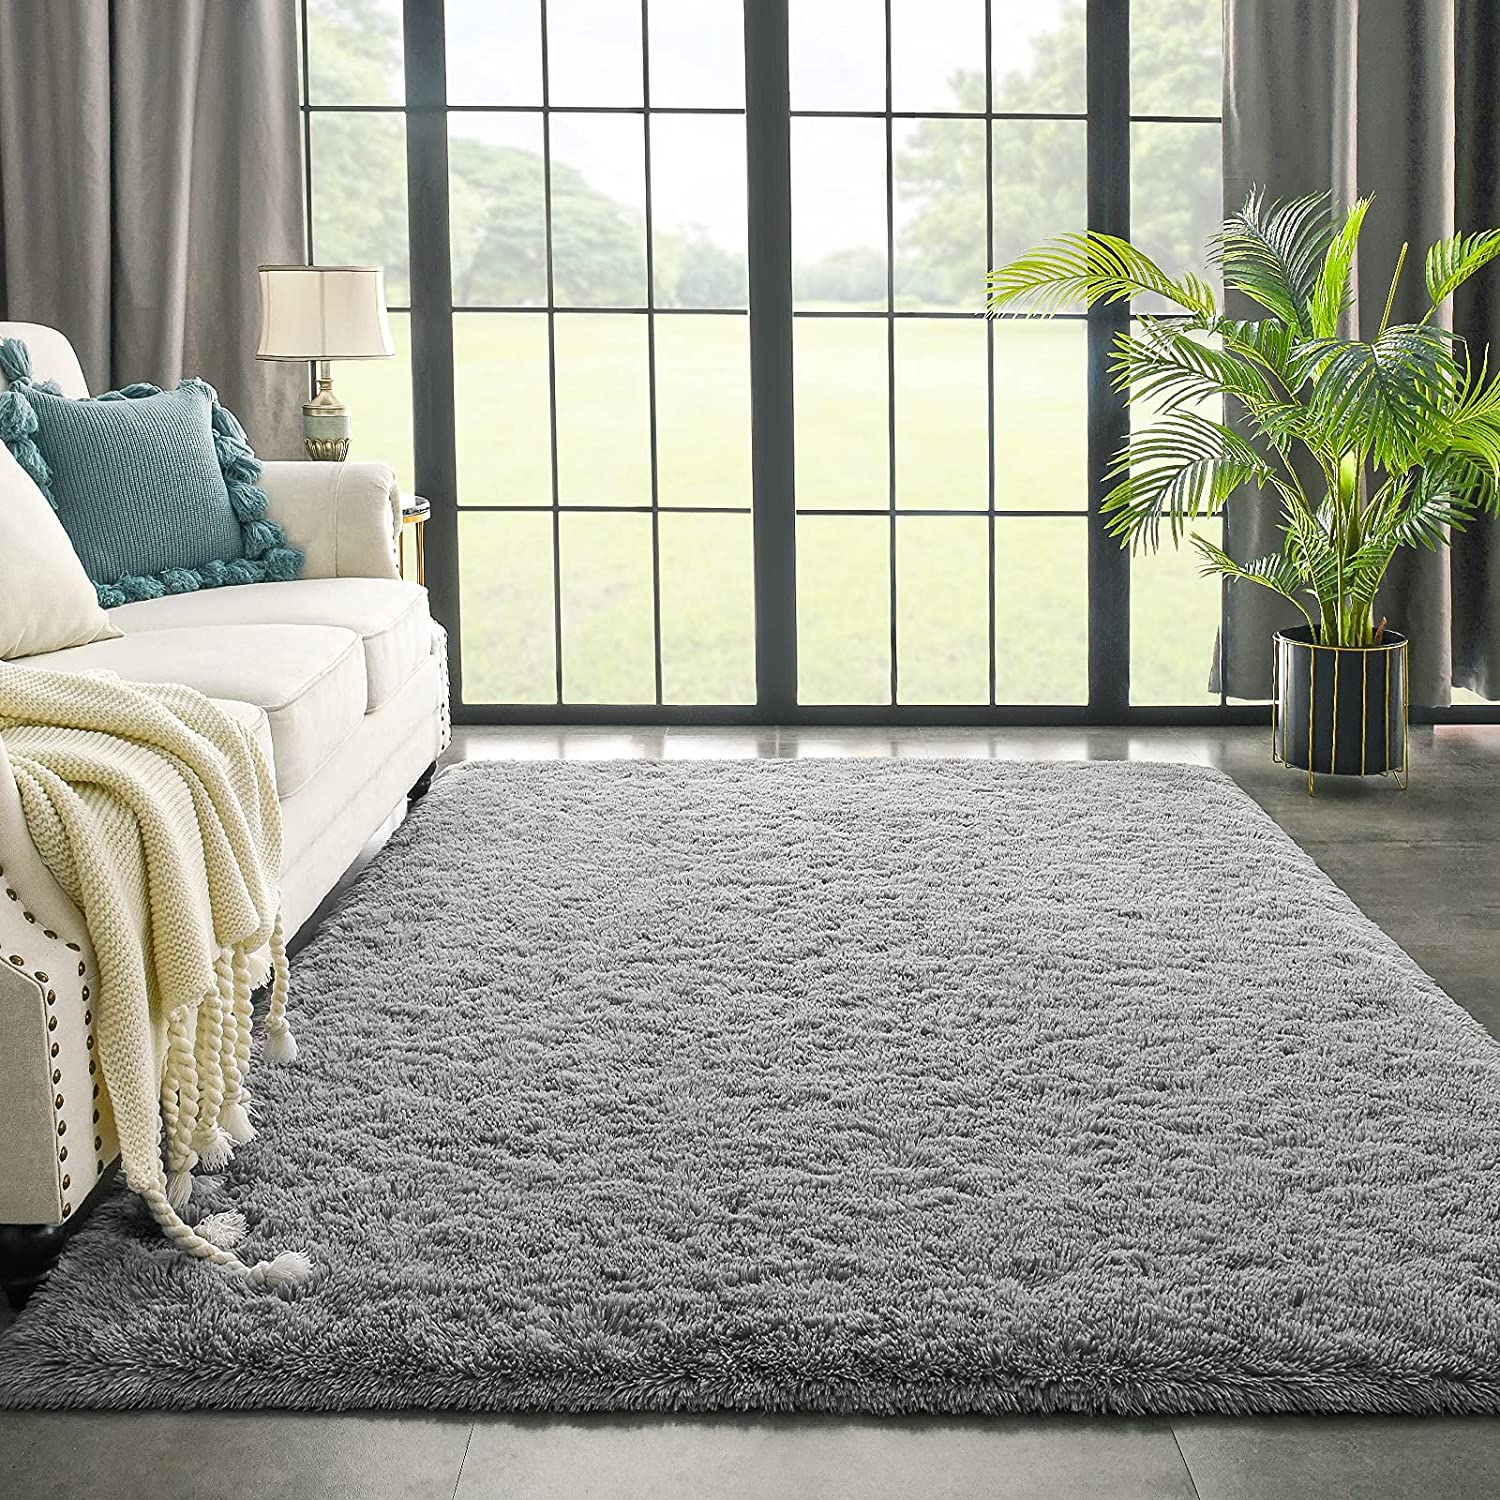 Grey Area Rug for Bedroom Living Room Carpet Home Décor